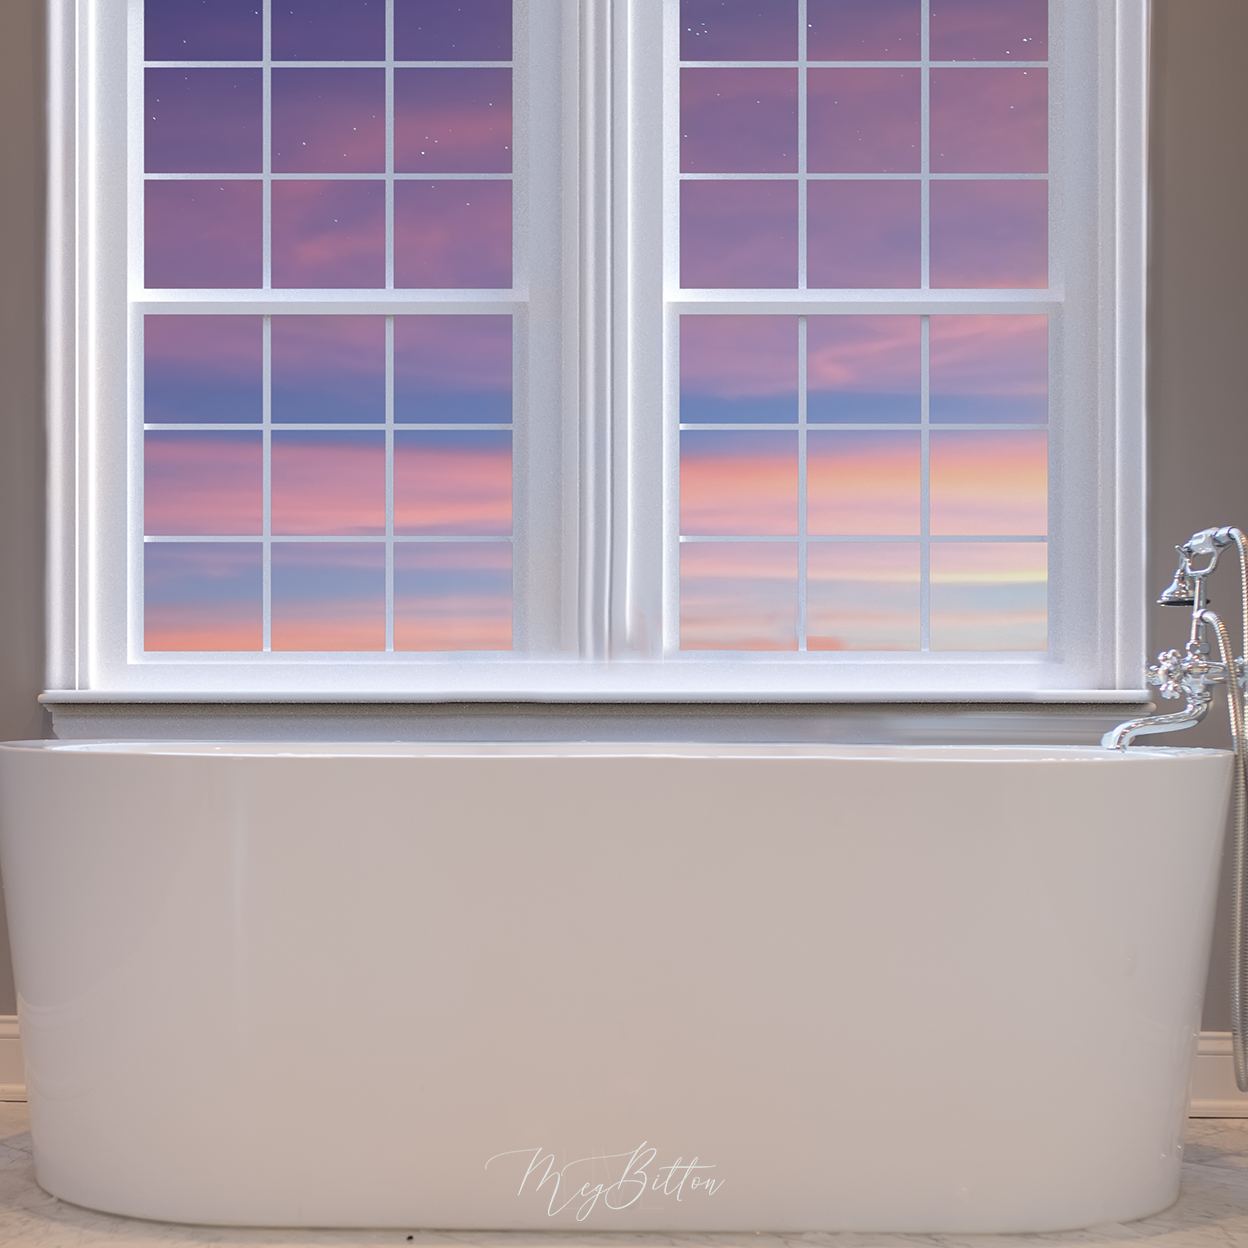 Digital Background: Bathtub at Sunset - Meg Bitton Productions